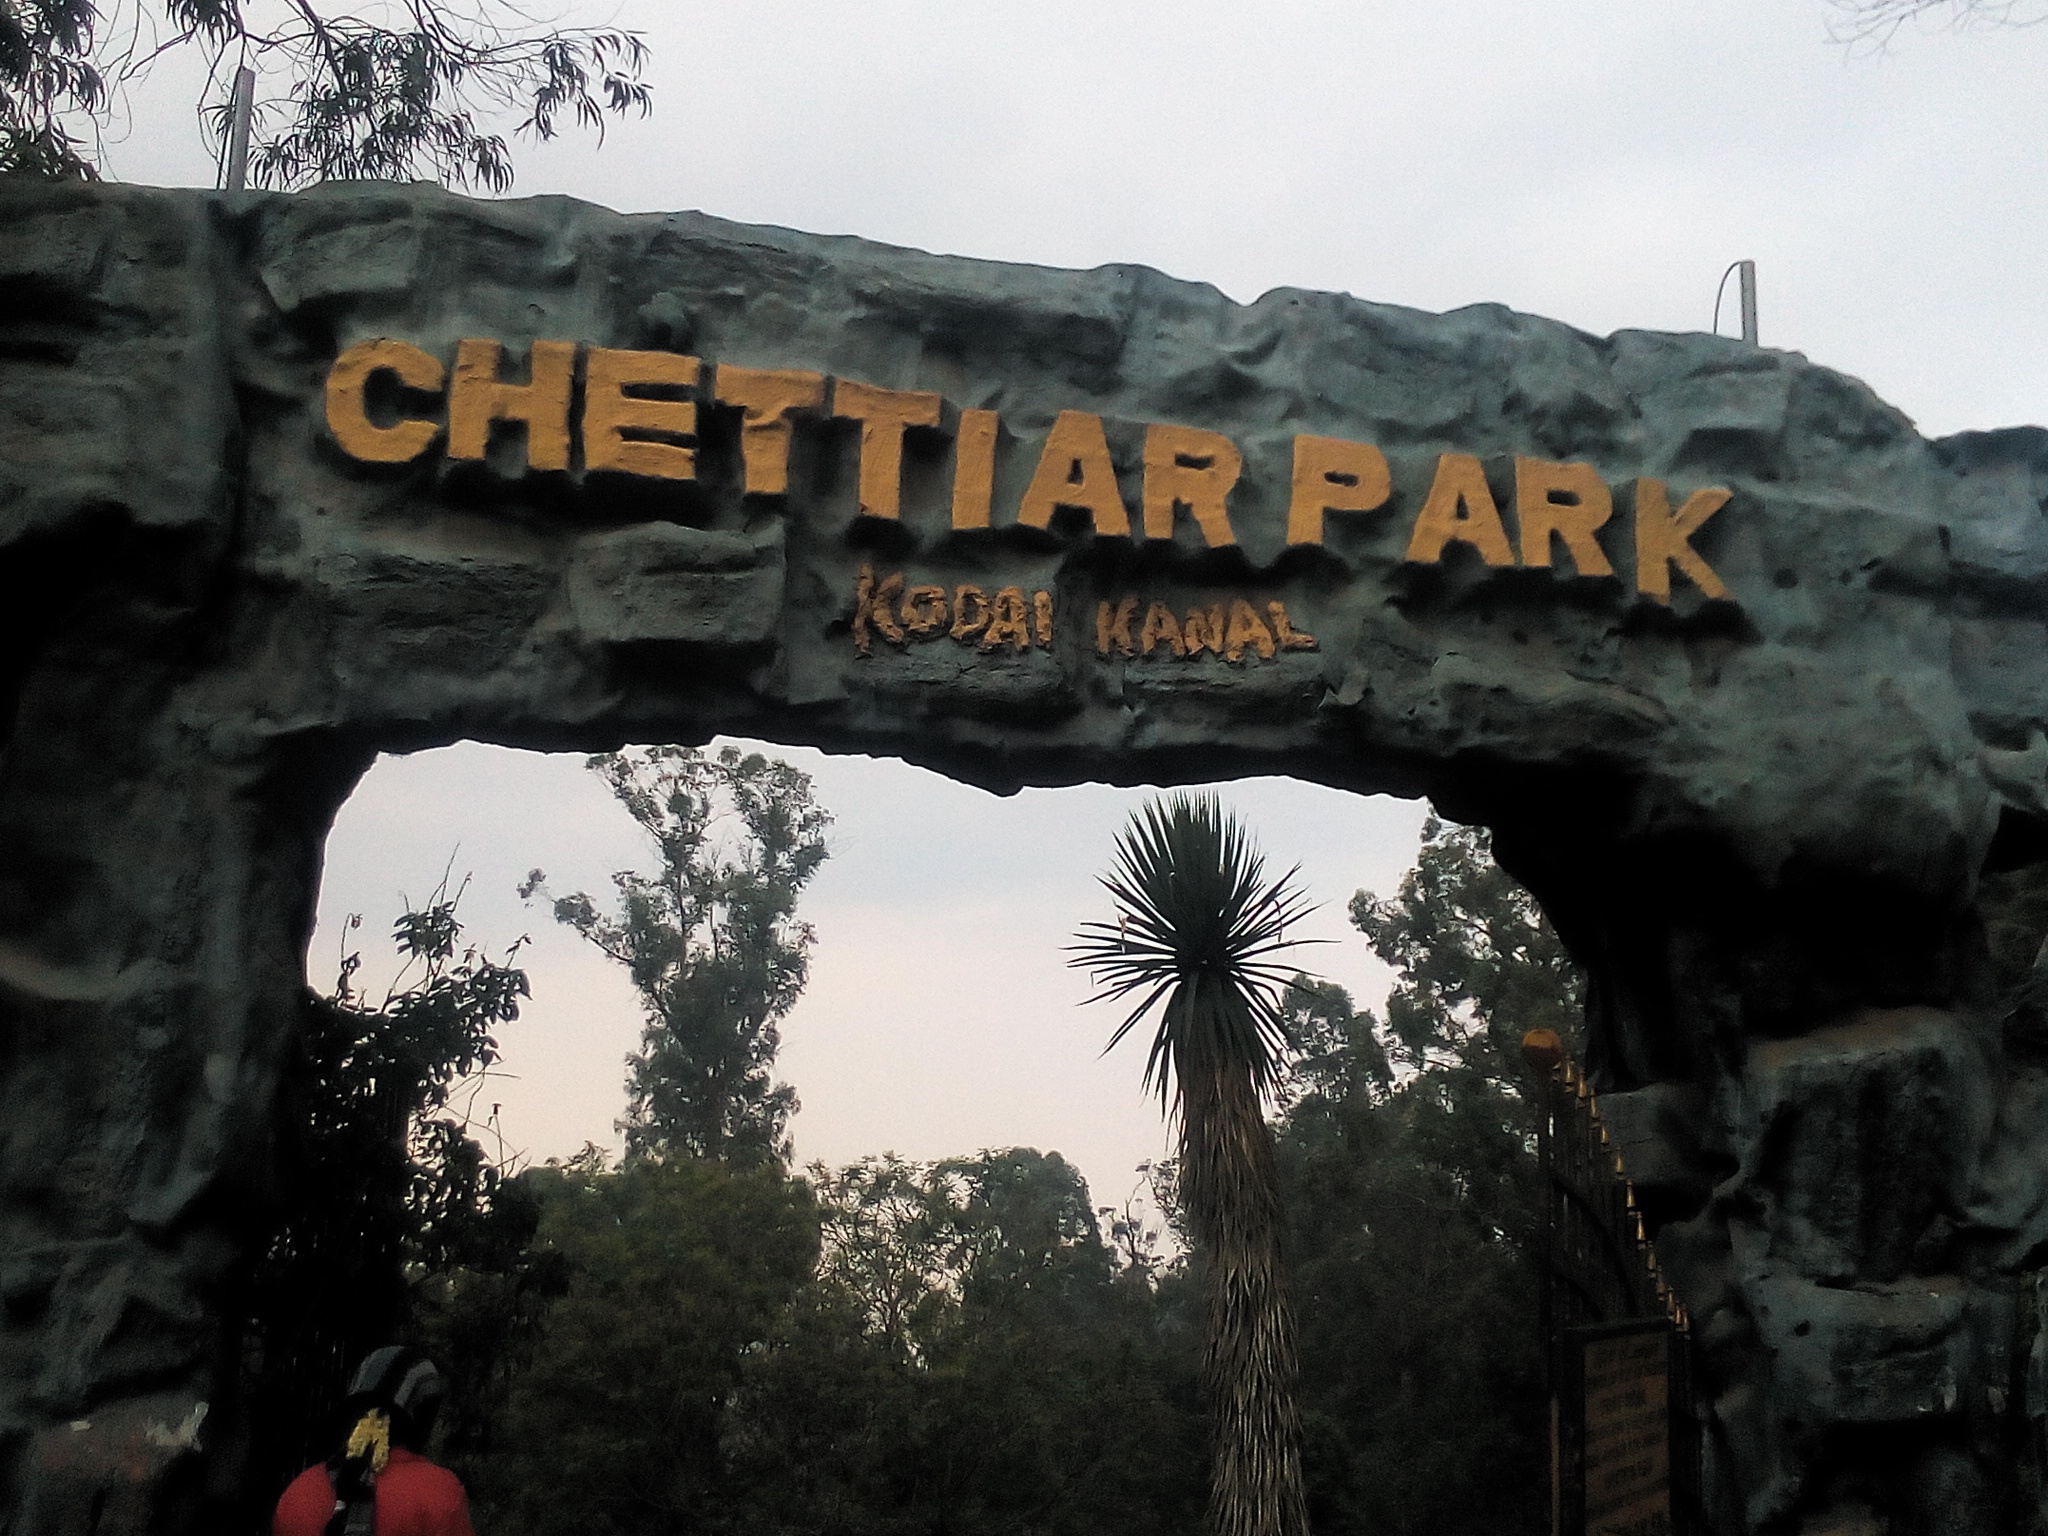 Chettiar Park Entrance